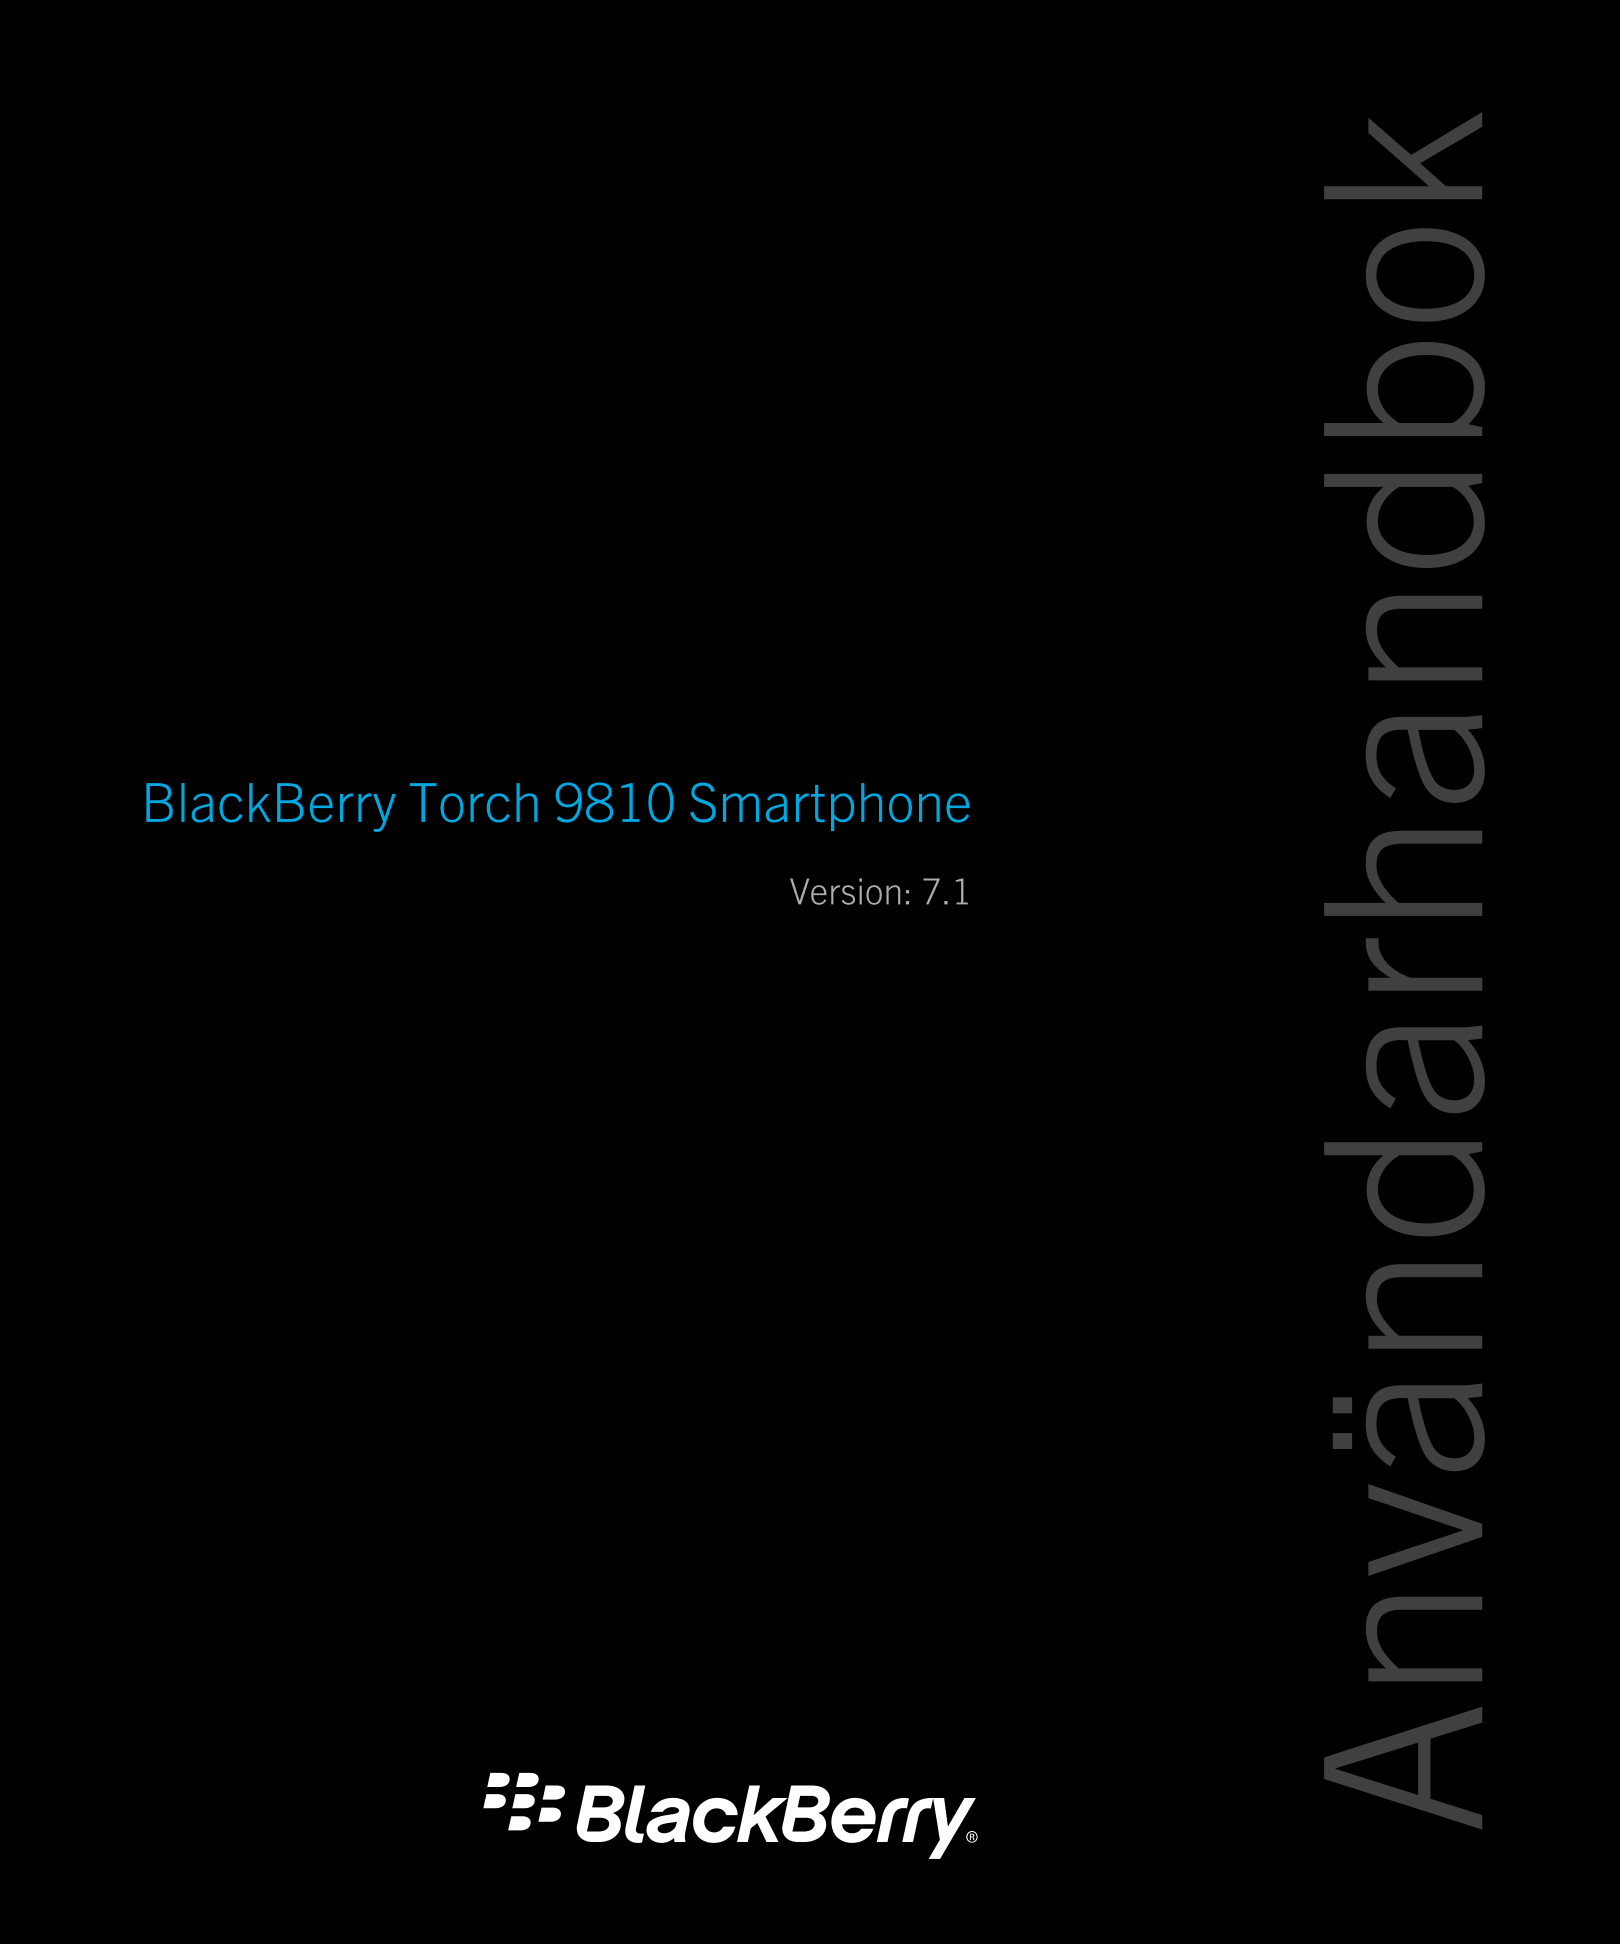 Användarhandbok
BlackBerry Torch 9810 Smartphone
Version: 7.1